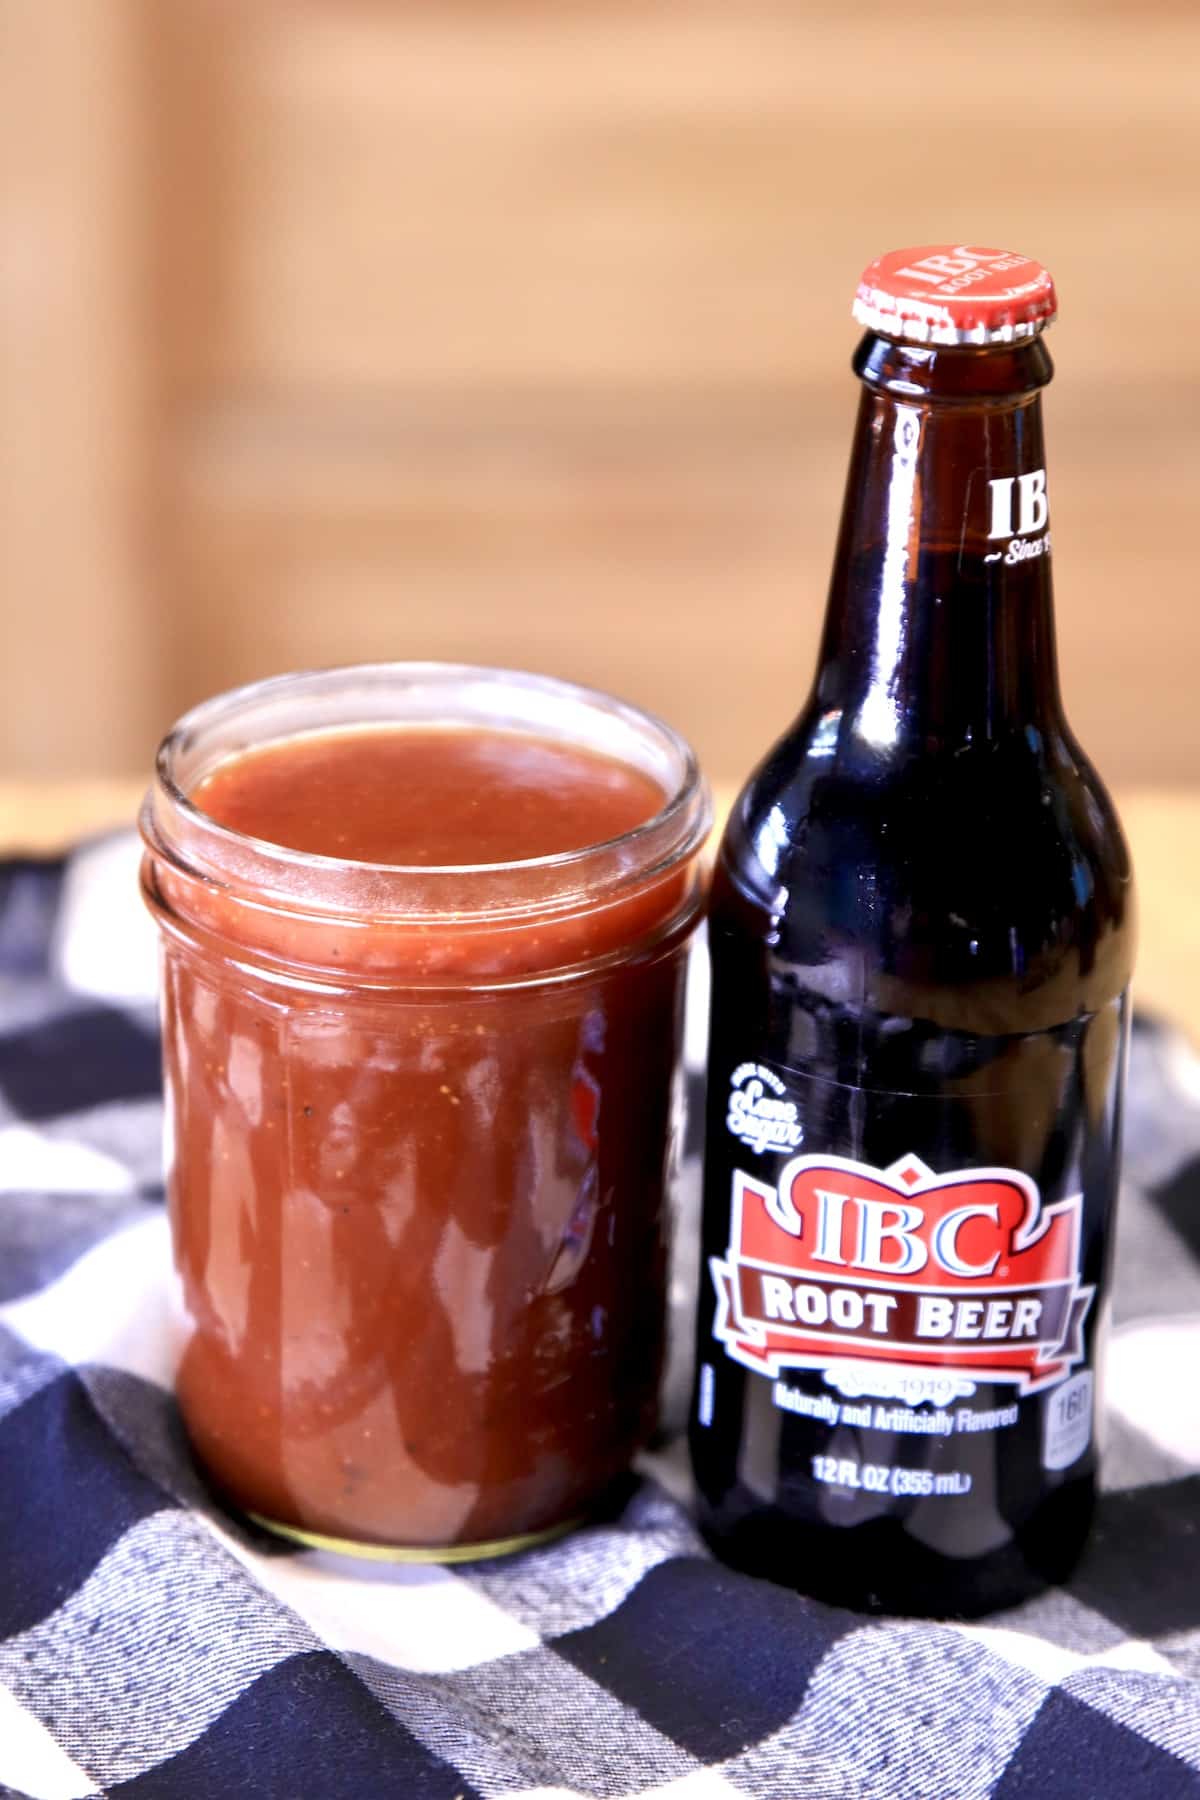 Jar of BBQ Sauce with Root Beer bottle.